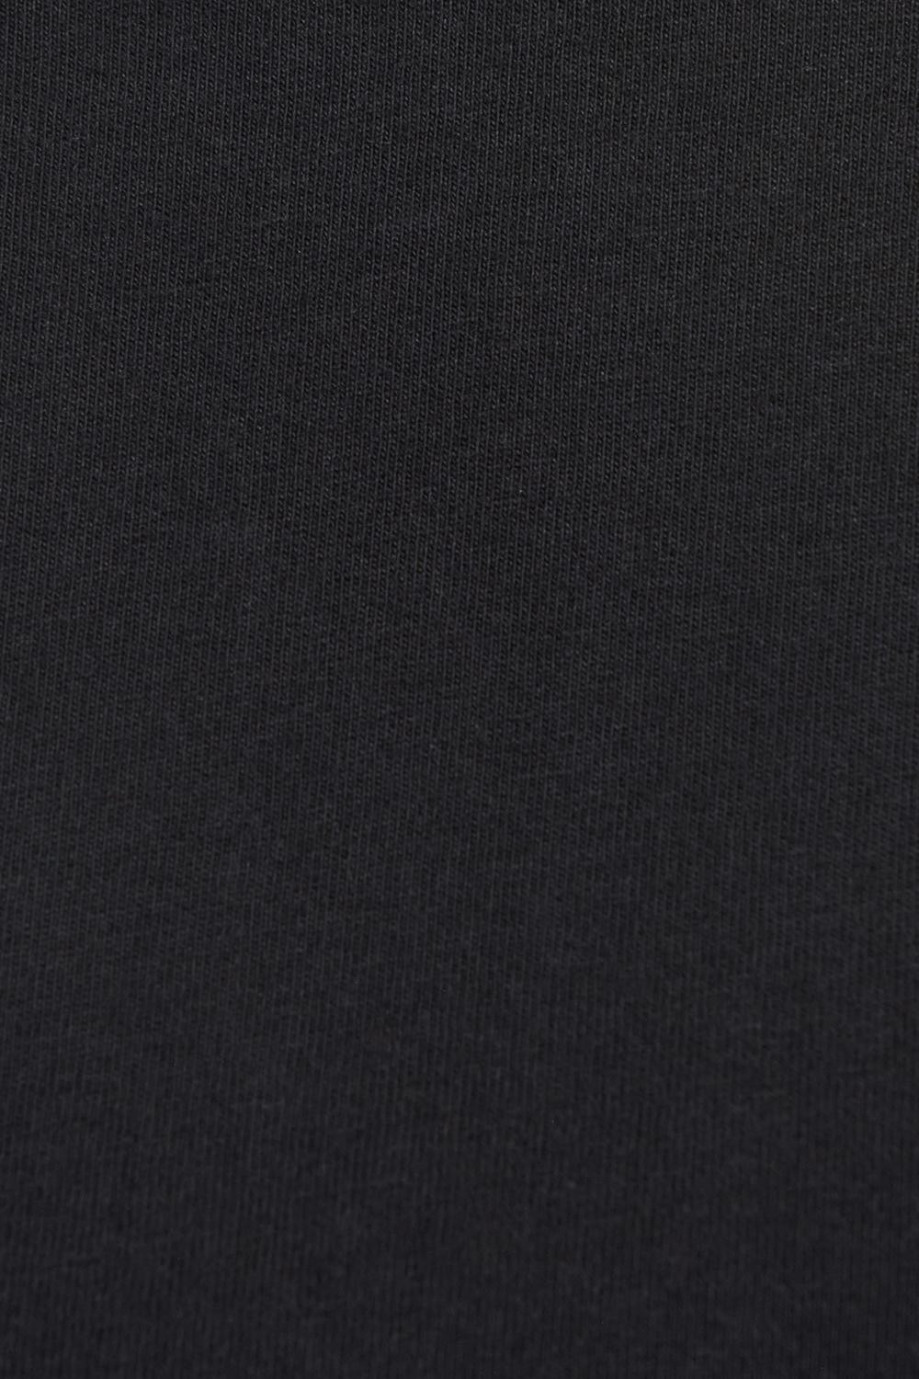 Camiseta negra con manga corta y cuello redondo en rib